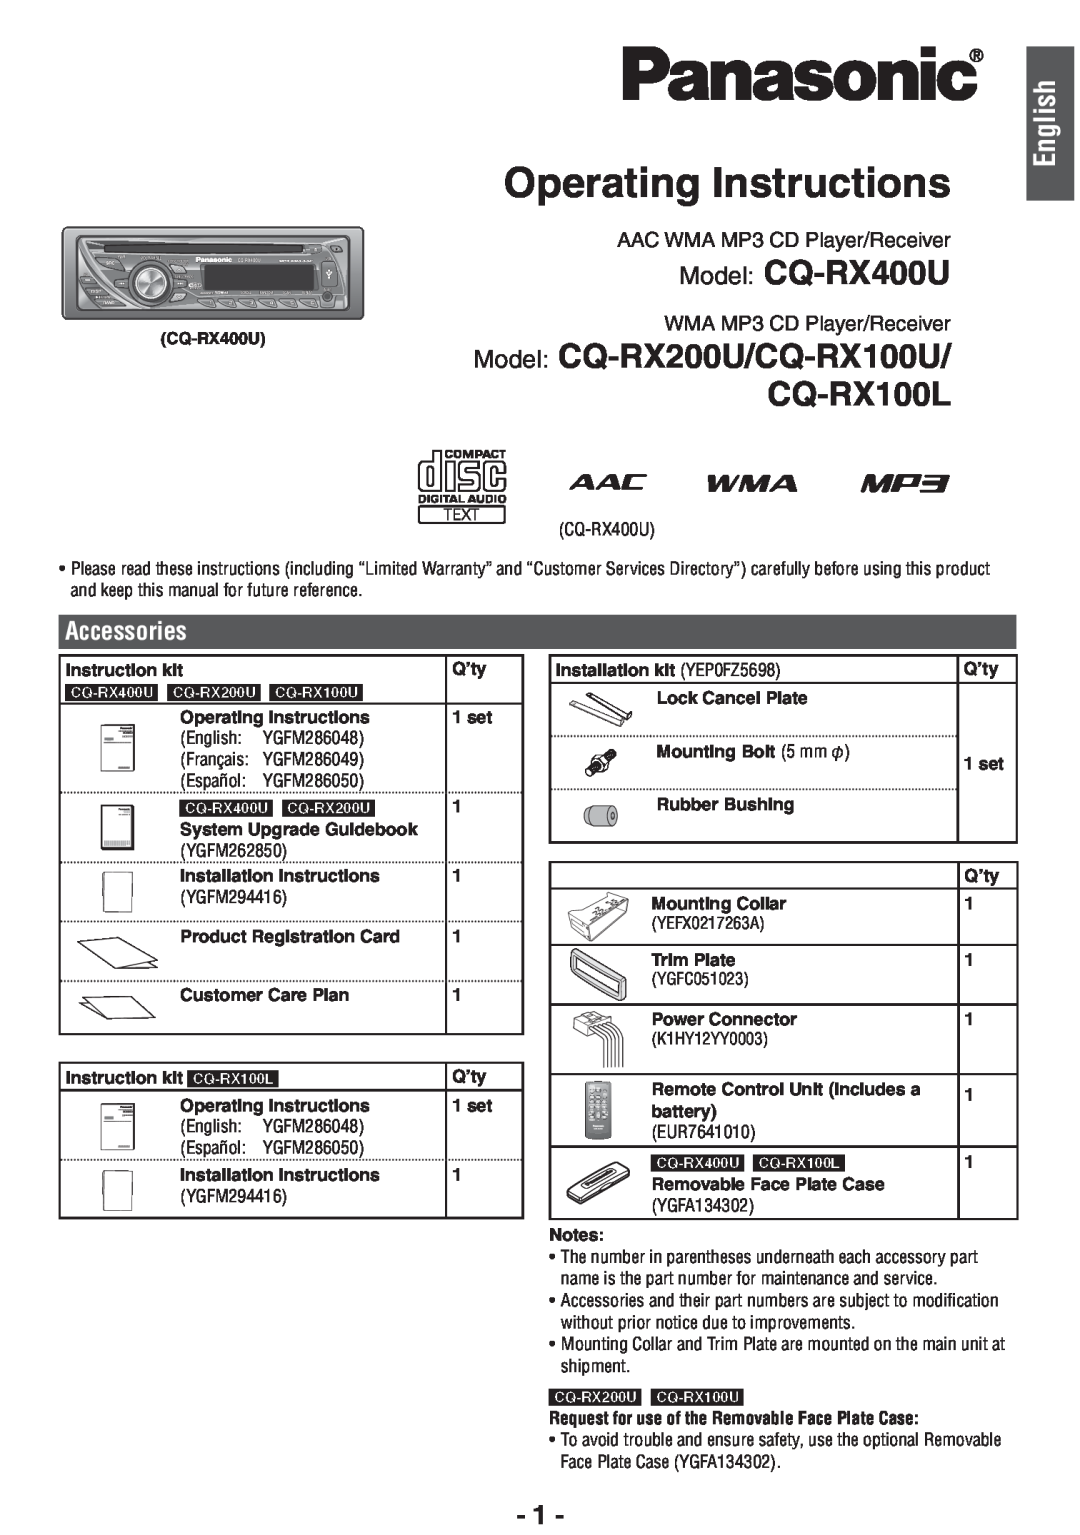 Panasonic CQ-RX100U operating instructions Accessories, Operating Instructions, Model CQ-RX400U, English, Instruction kit 